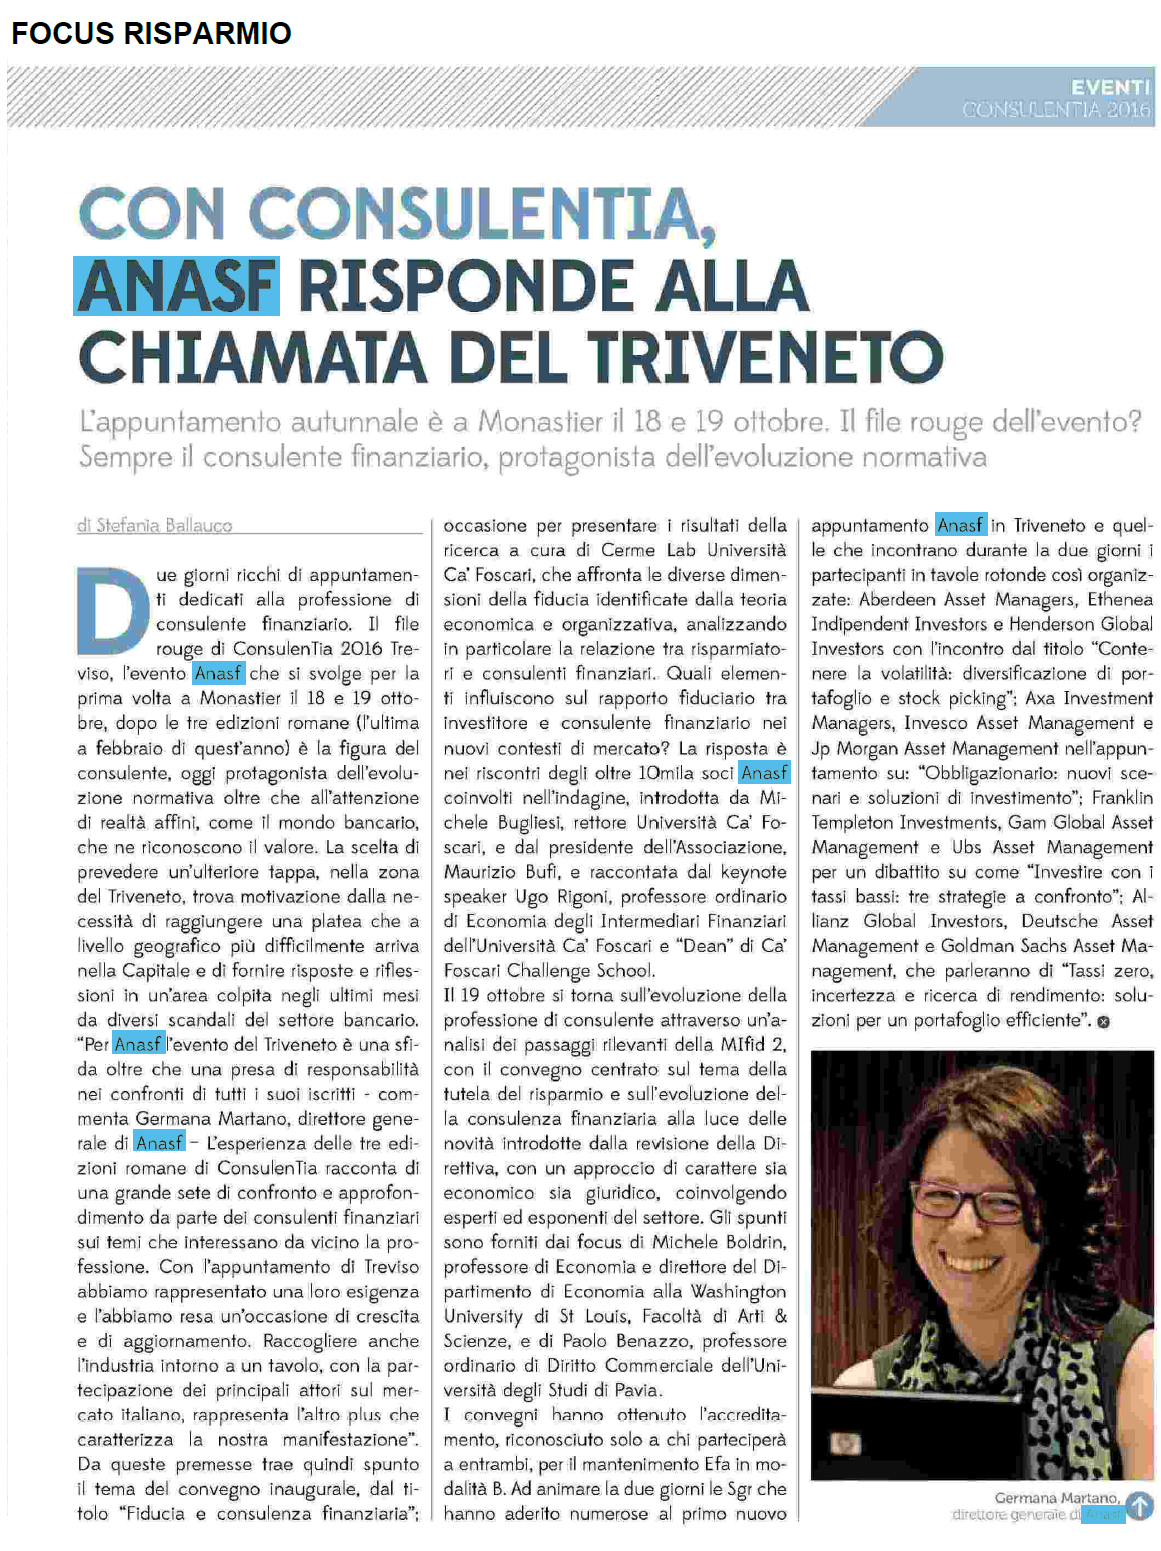 articolo su ConsulenTia16 Treviso su Focus Risparmio